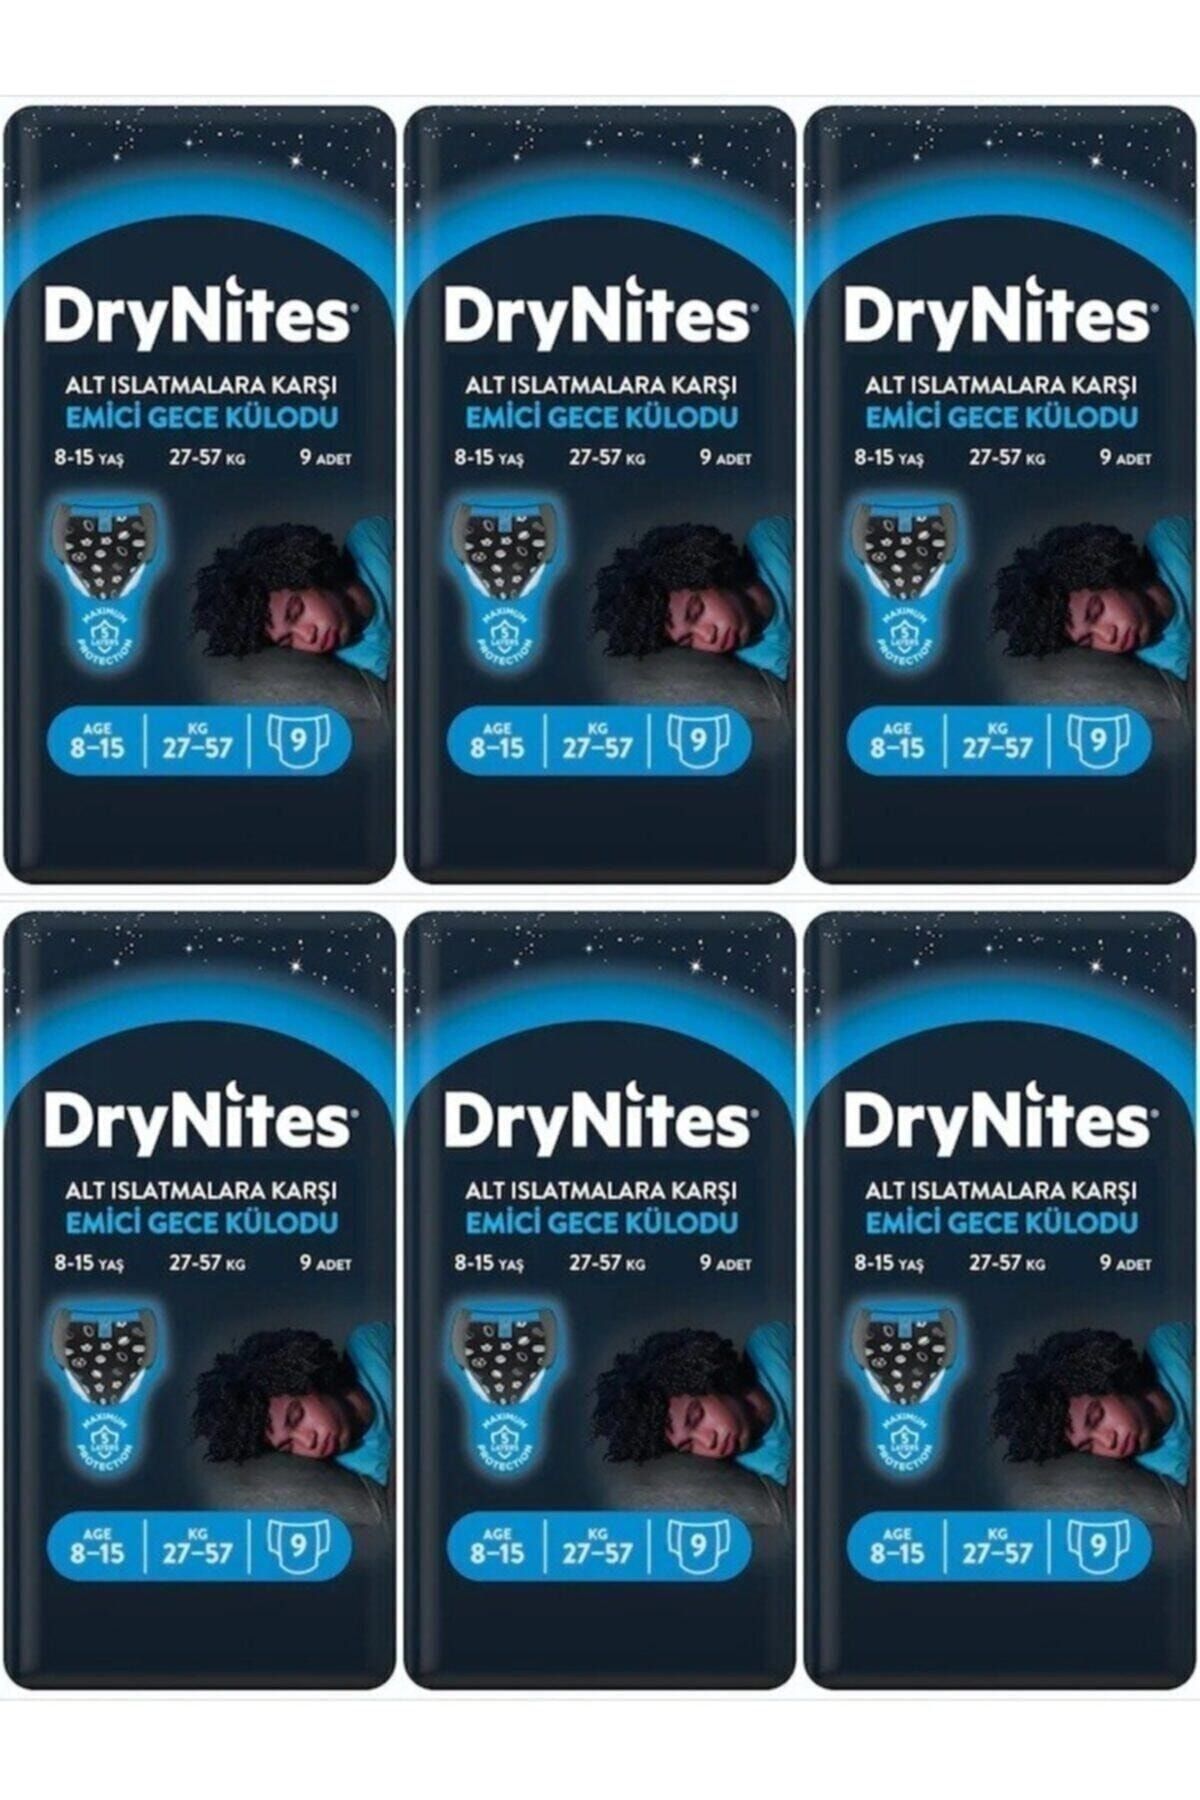 DryNites Erkek Emici Gece Külodu 8-15 Yaş 27-57 Kg * 9lu 12 Paket * 108 Adet